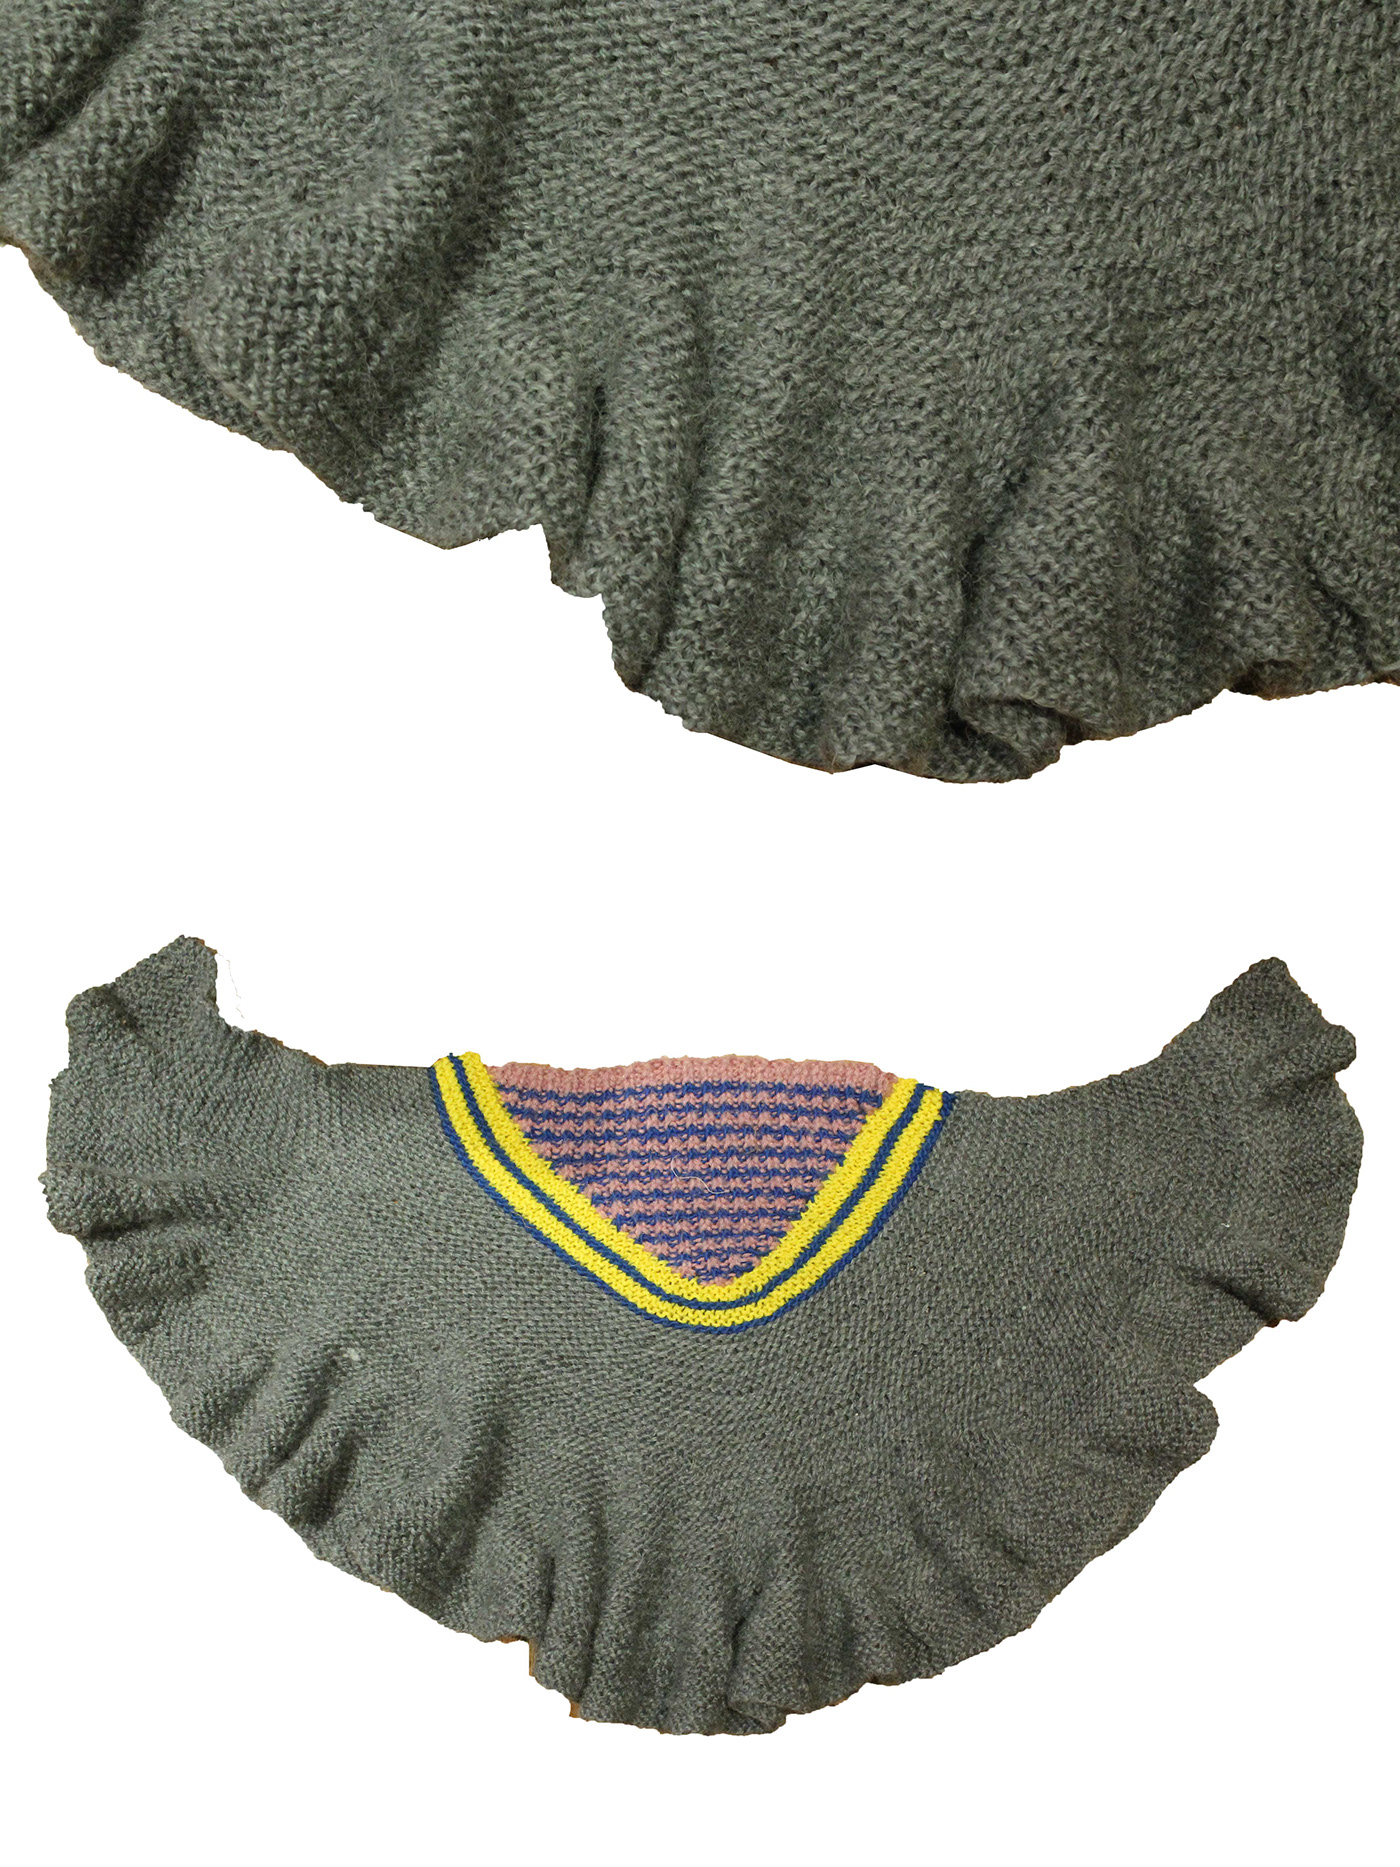 knitwear knitting machine knitting Handknitting apparel Fashion  stripes color